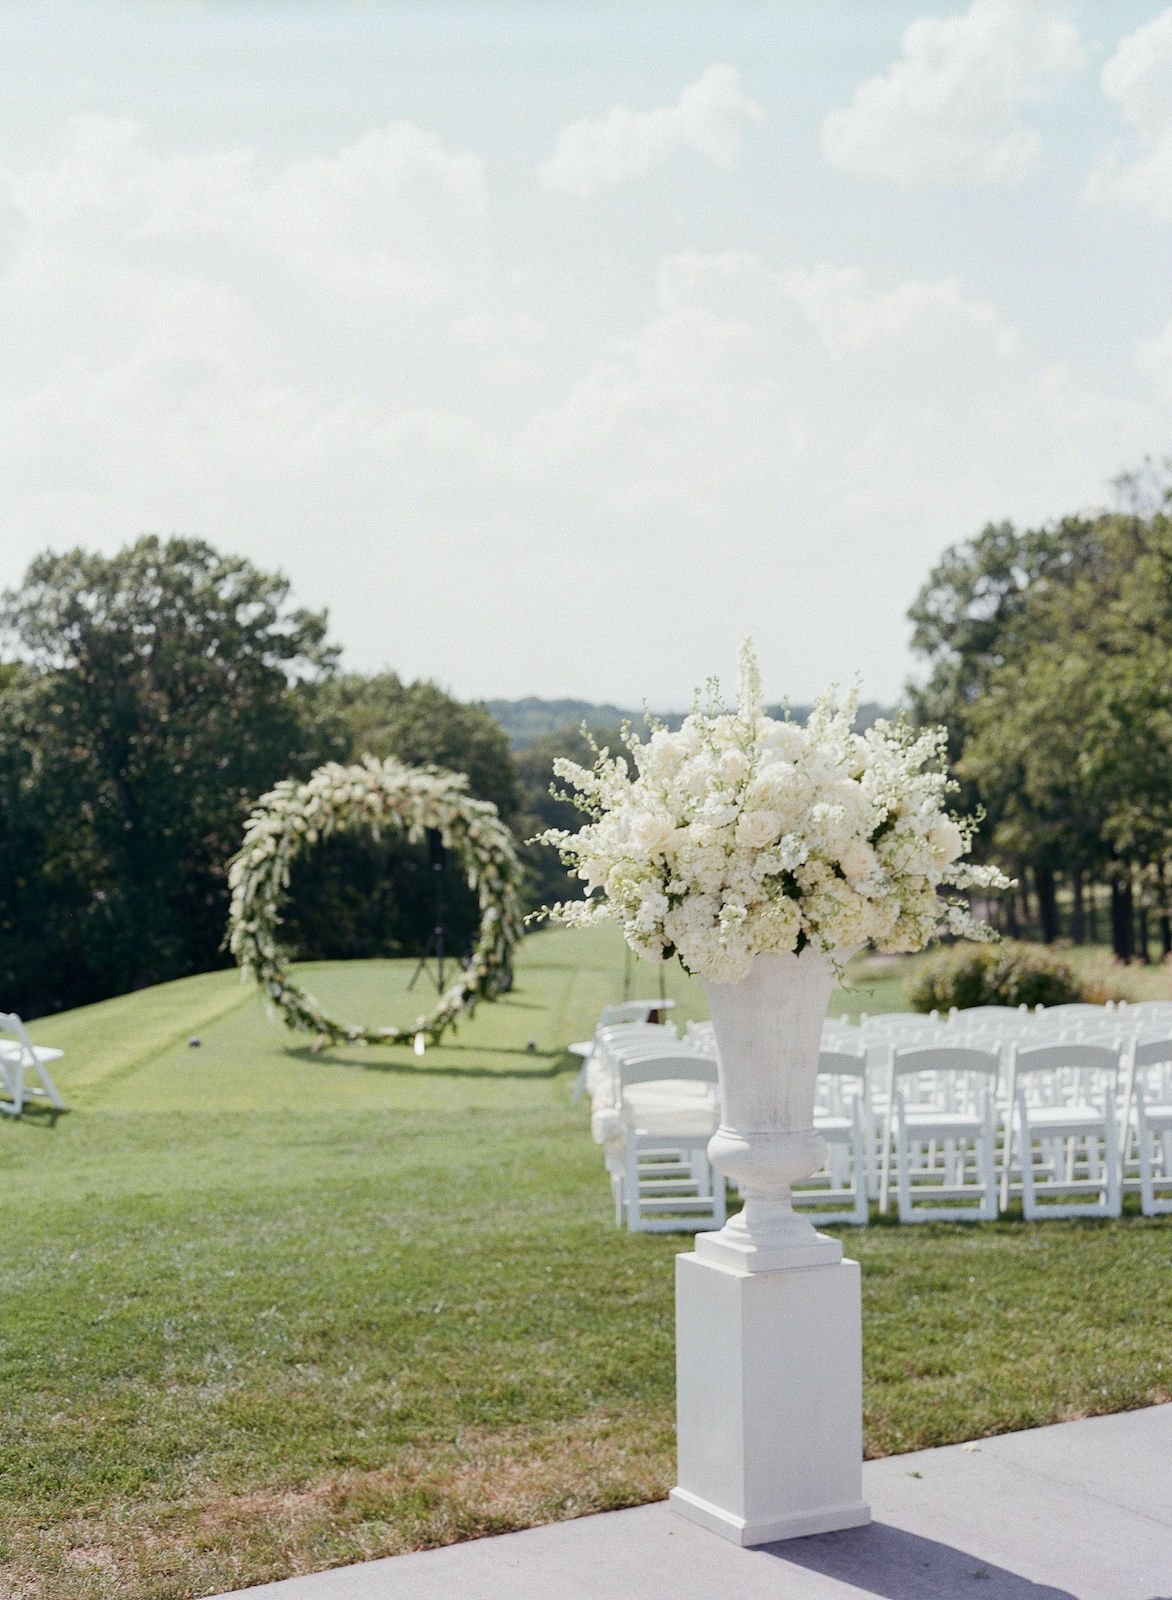 Belli-Fiori-St.-Louis-Florist-Sunset-Country-Club-Outdoor-Wedding-Ceremony-3.jpg